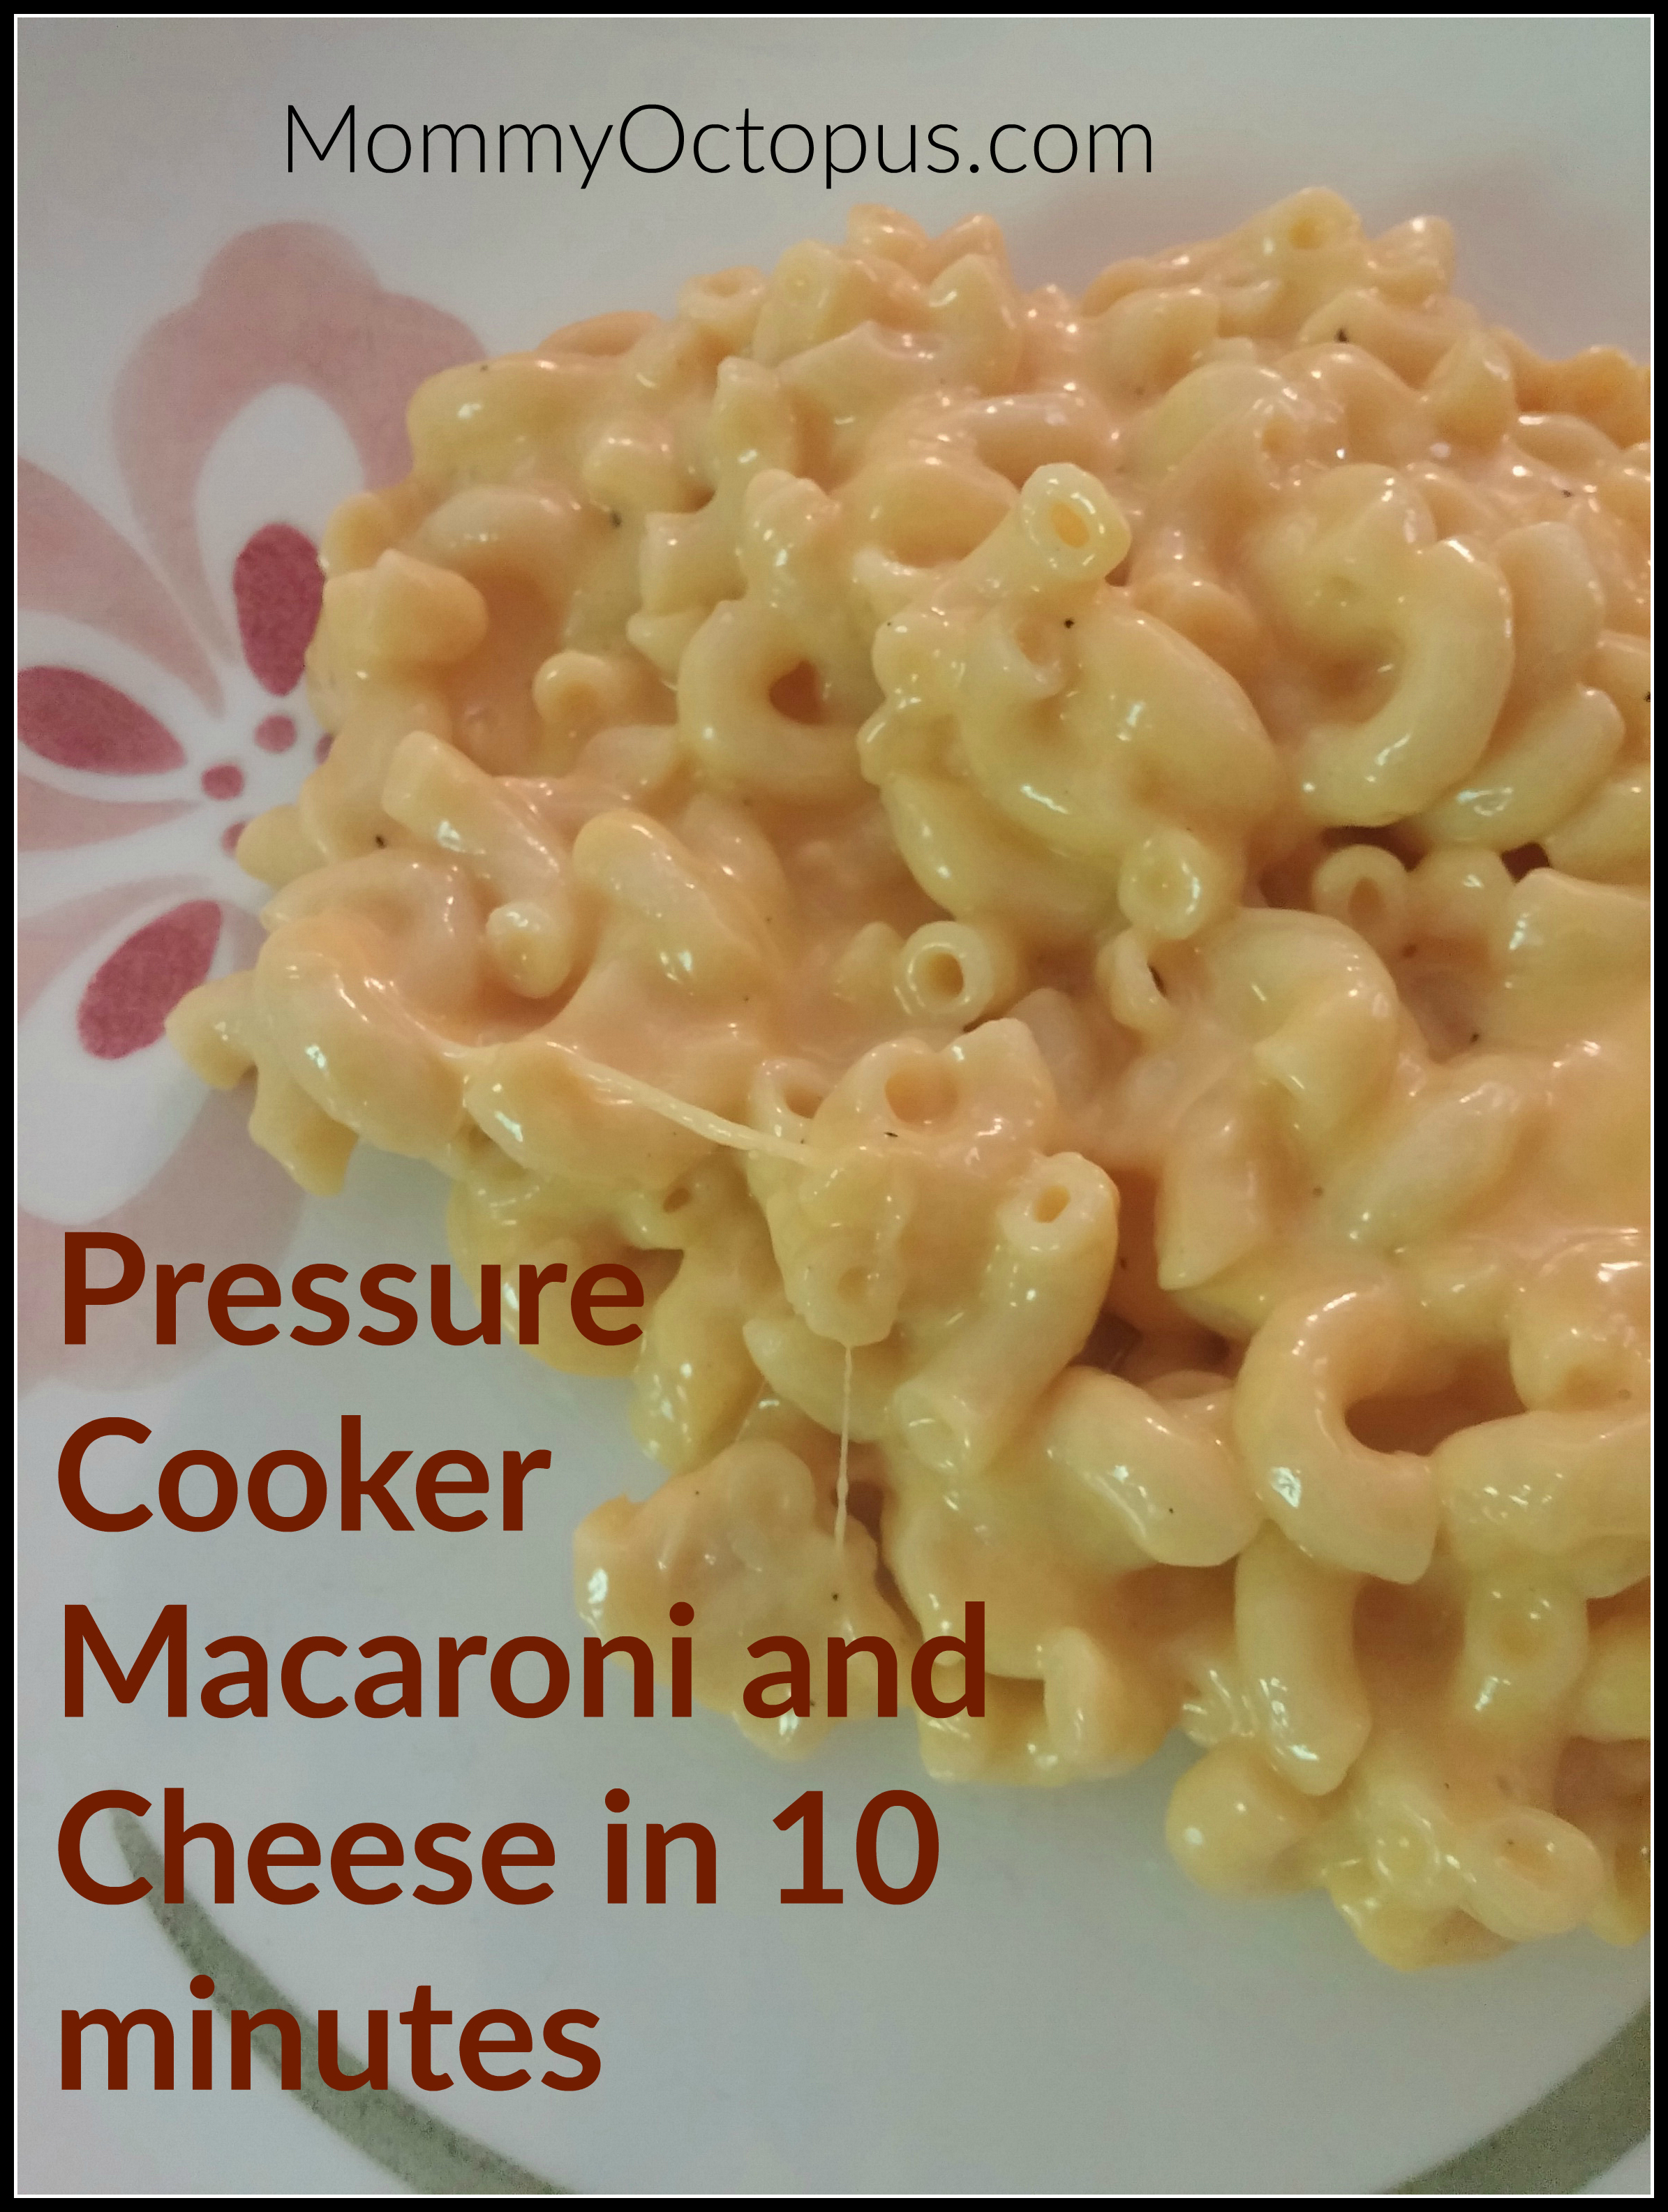 Pressure Cooker Macaroni and Cheese